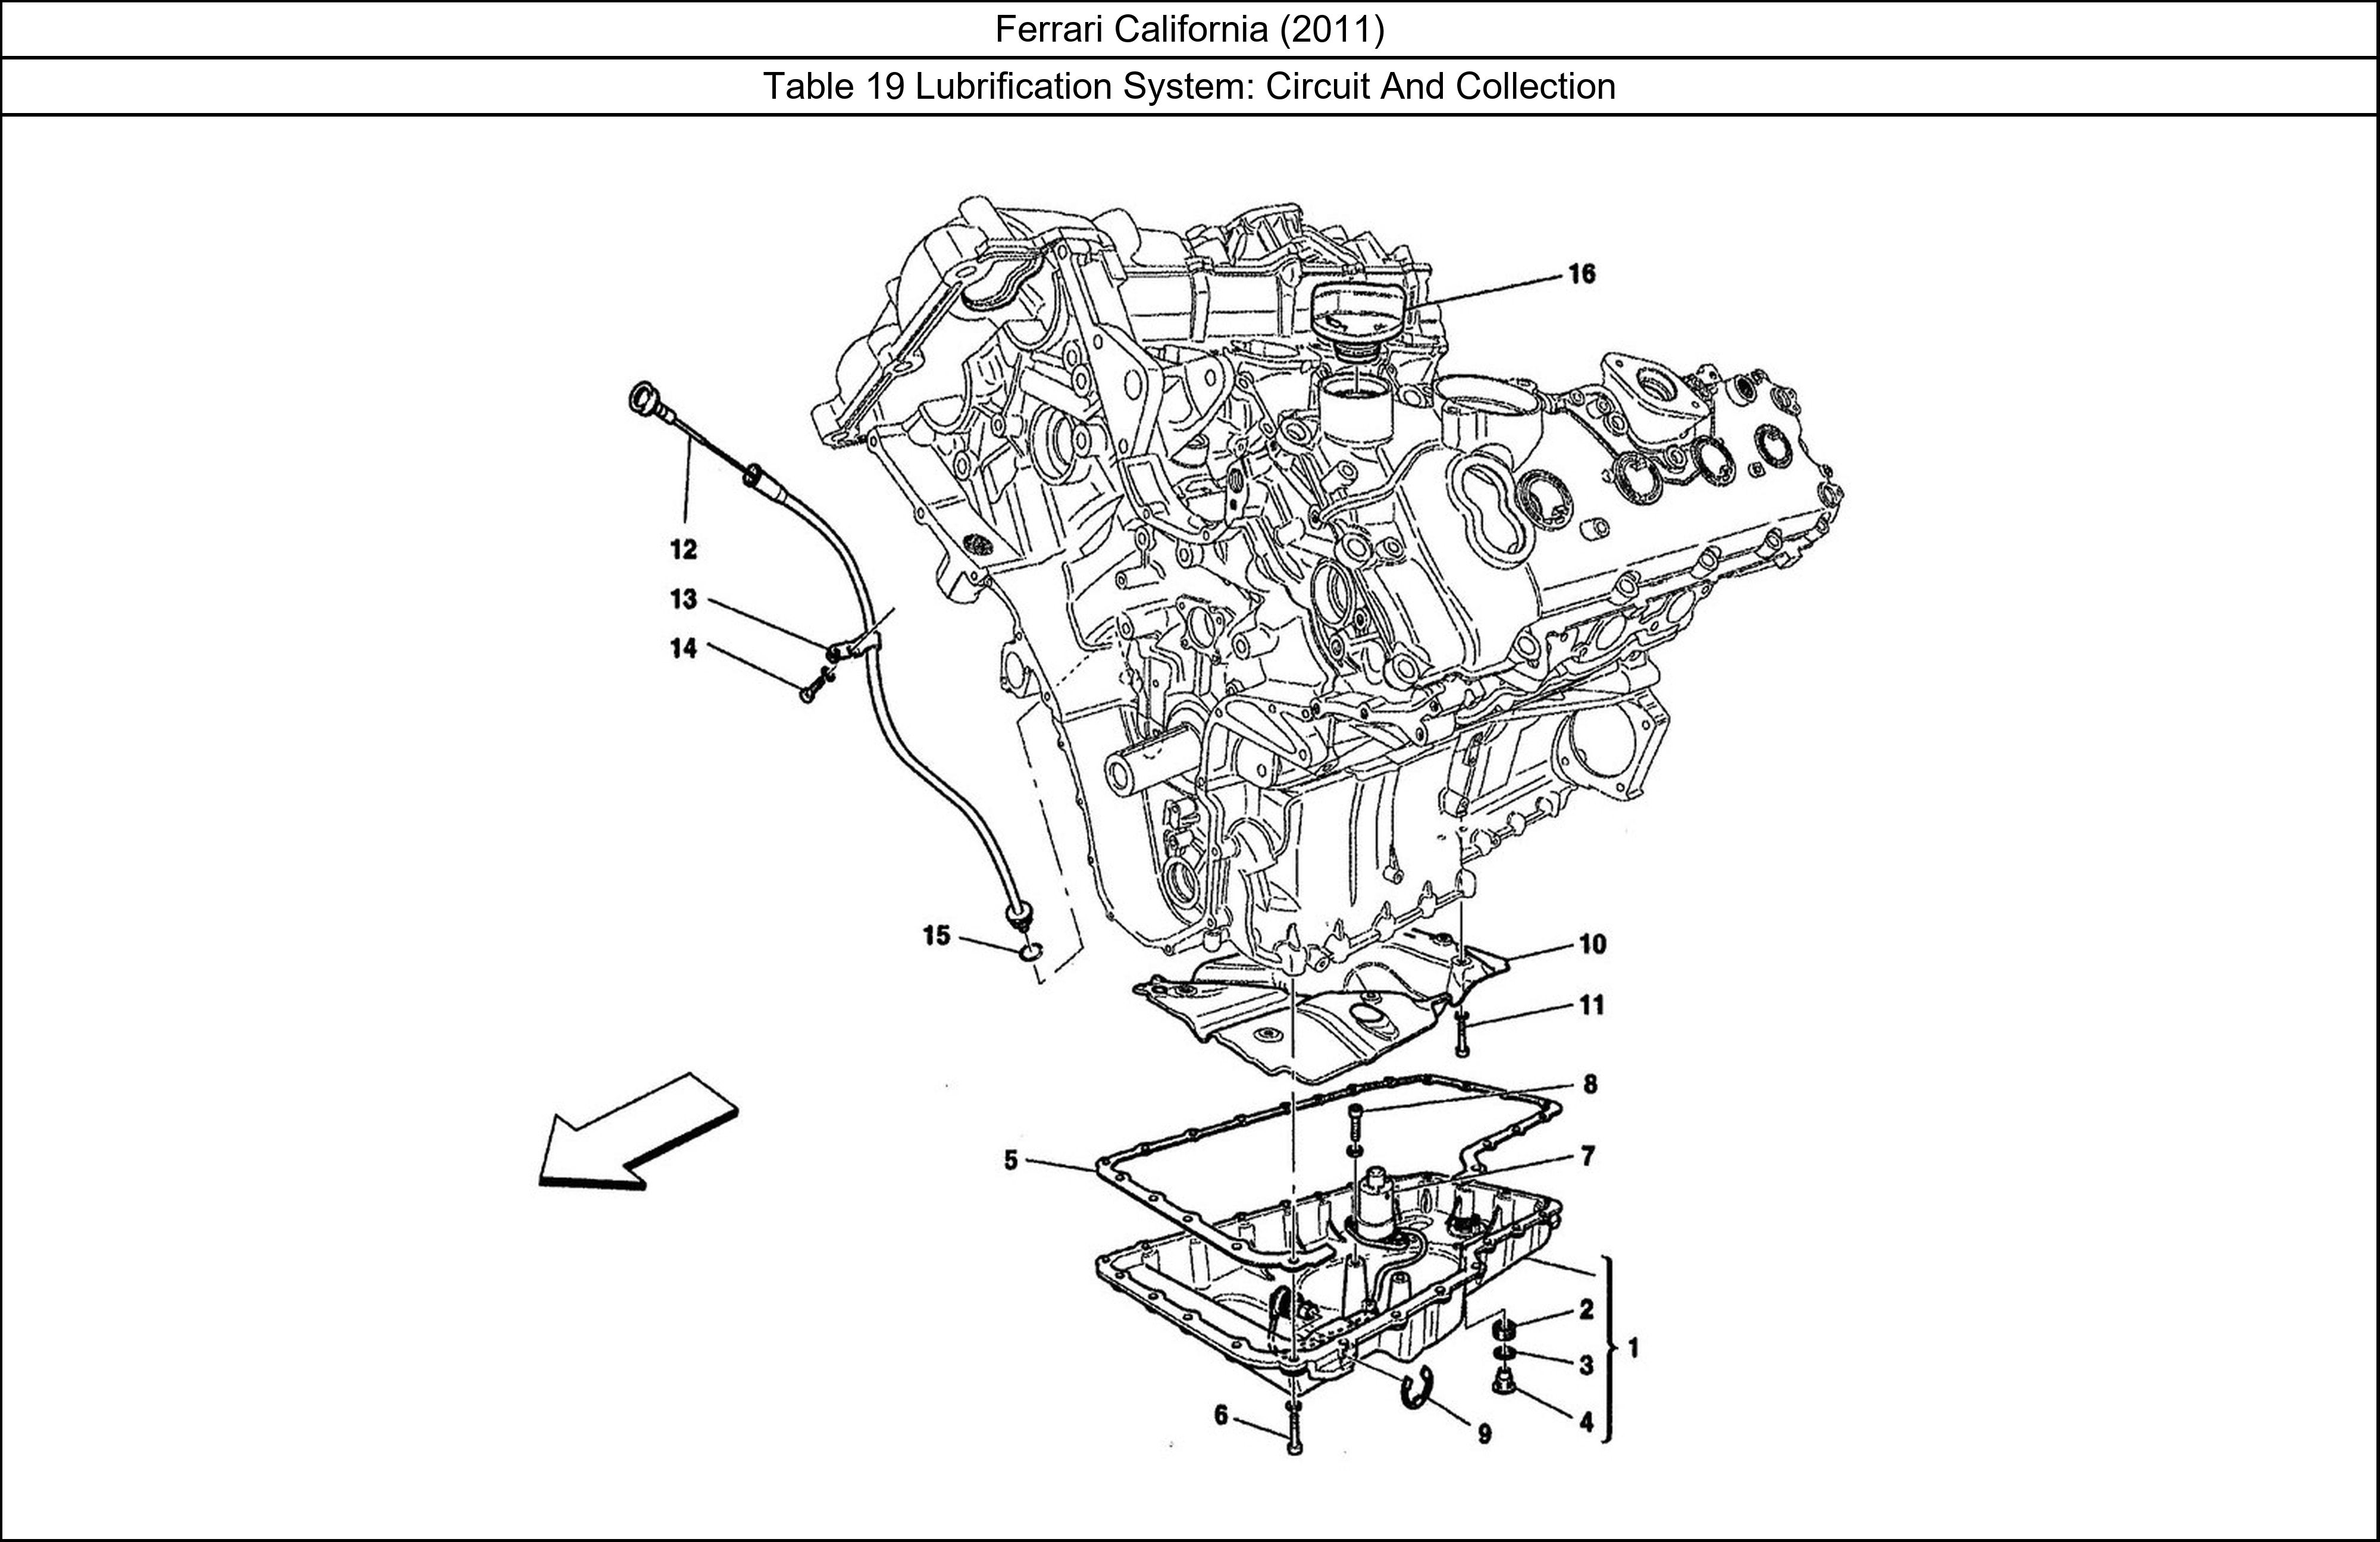 Ferrari Parts Ferrari California (2011) Table 19 Lubrification System: Circuit And Collection